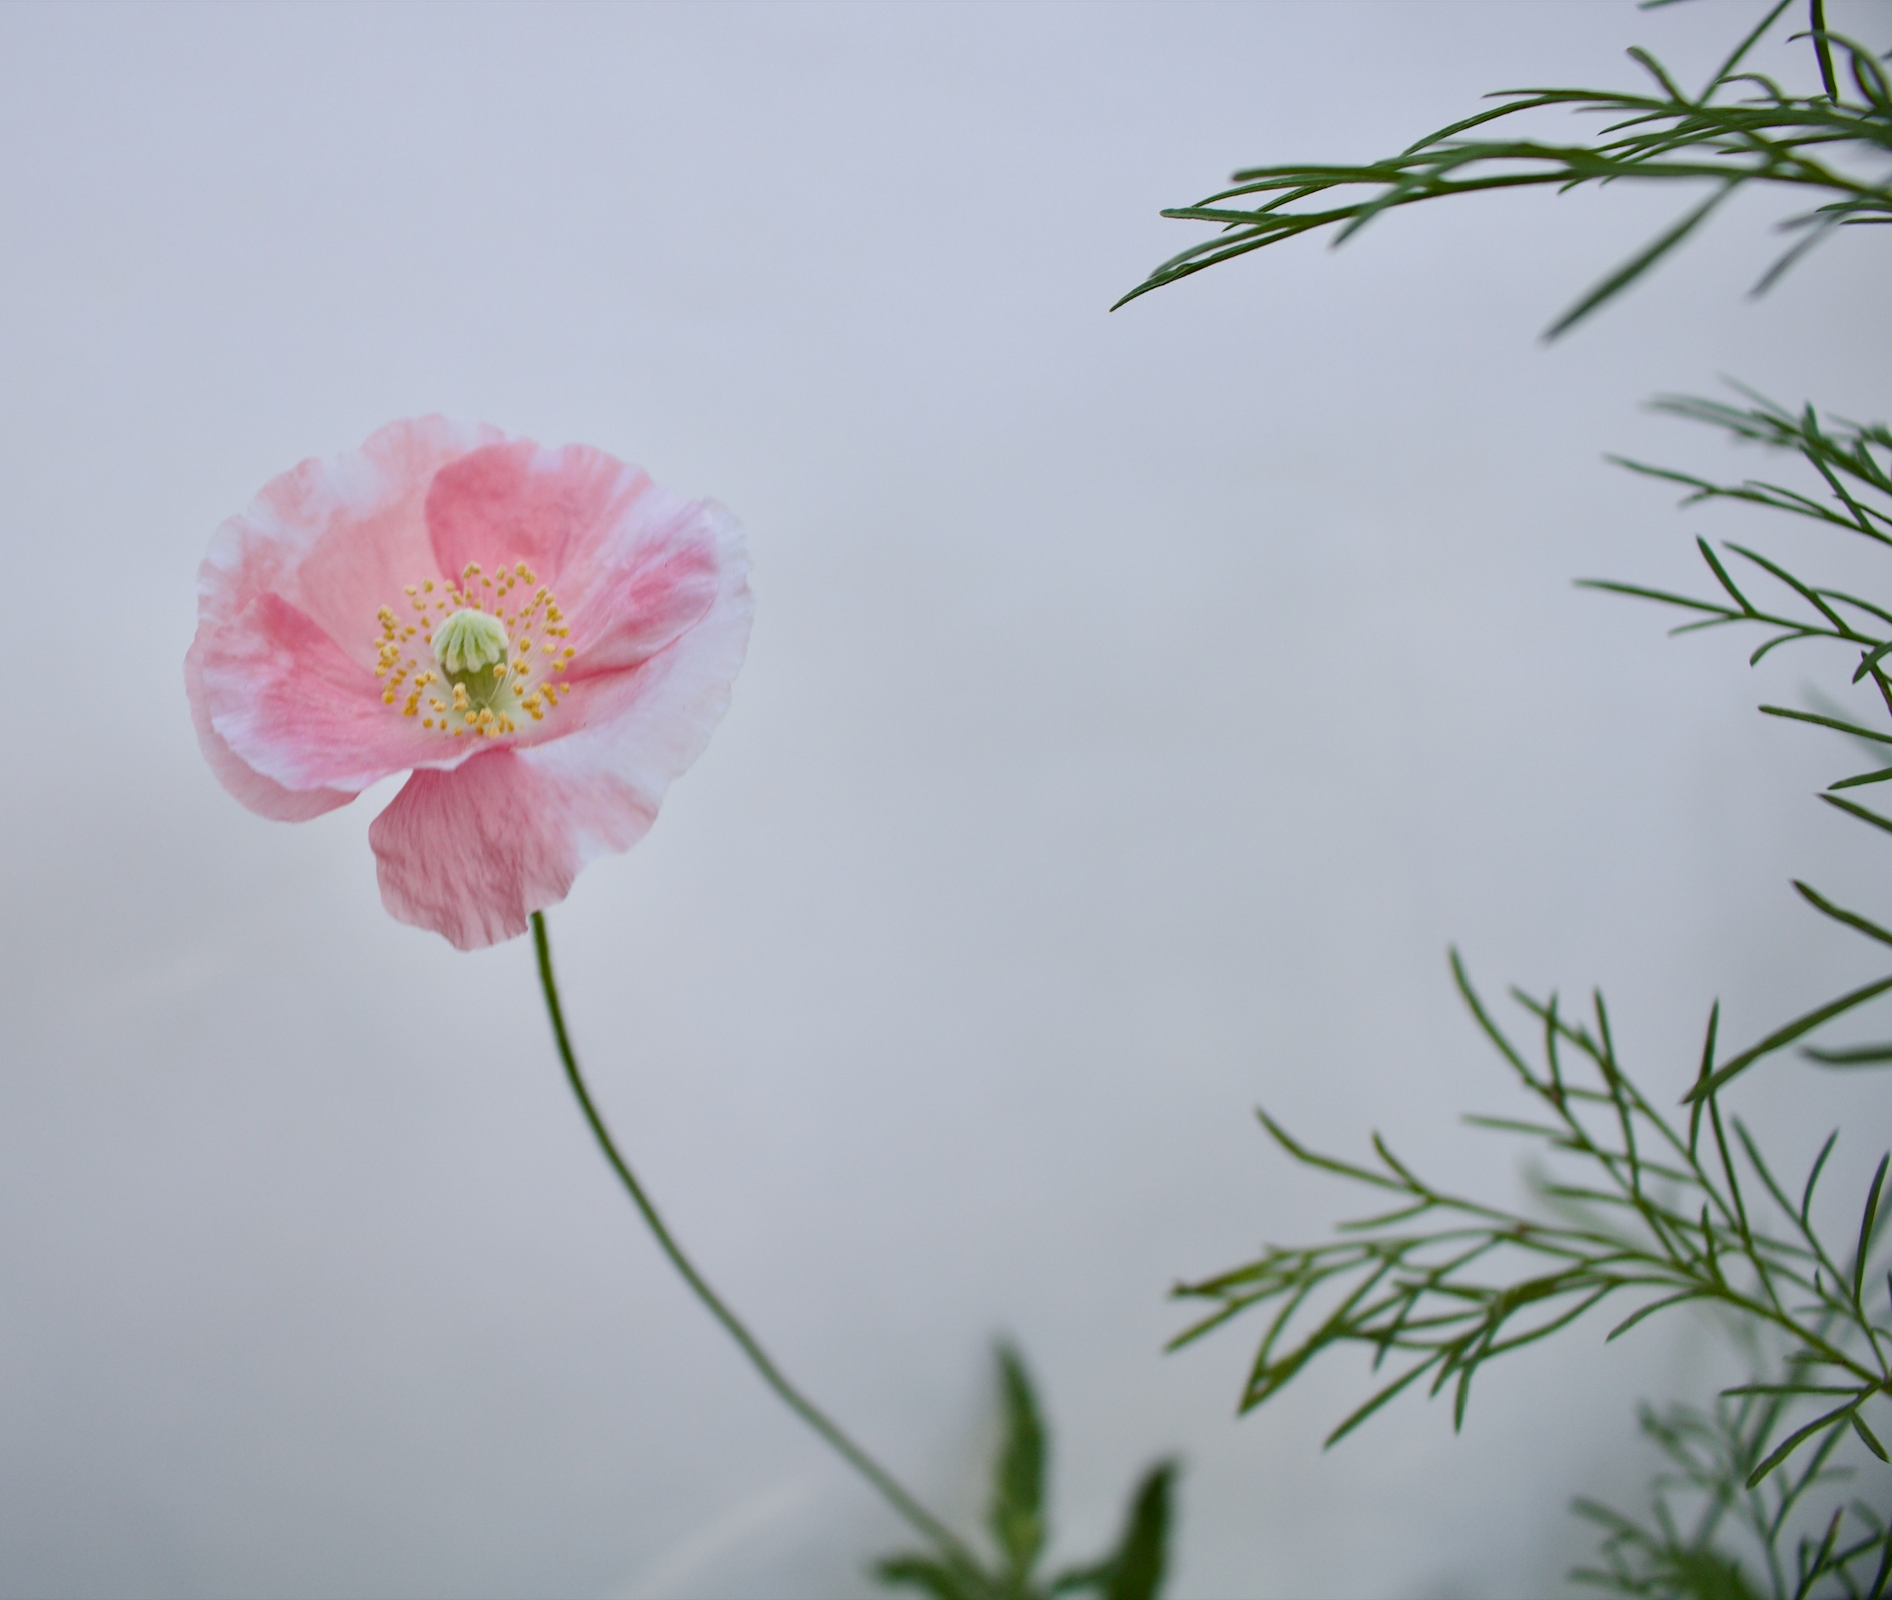 A pink poppy flower.